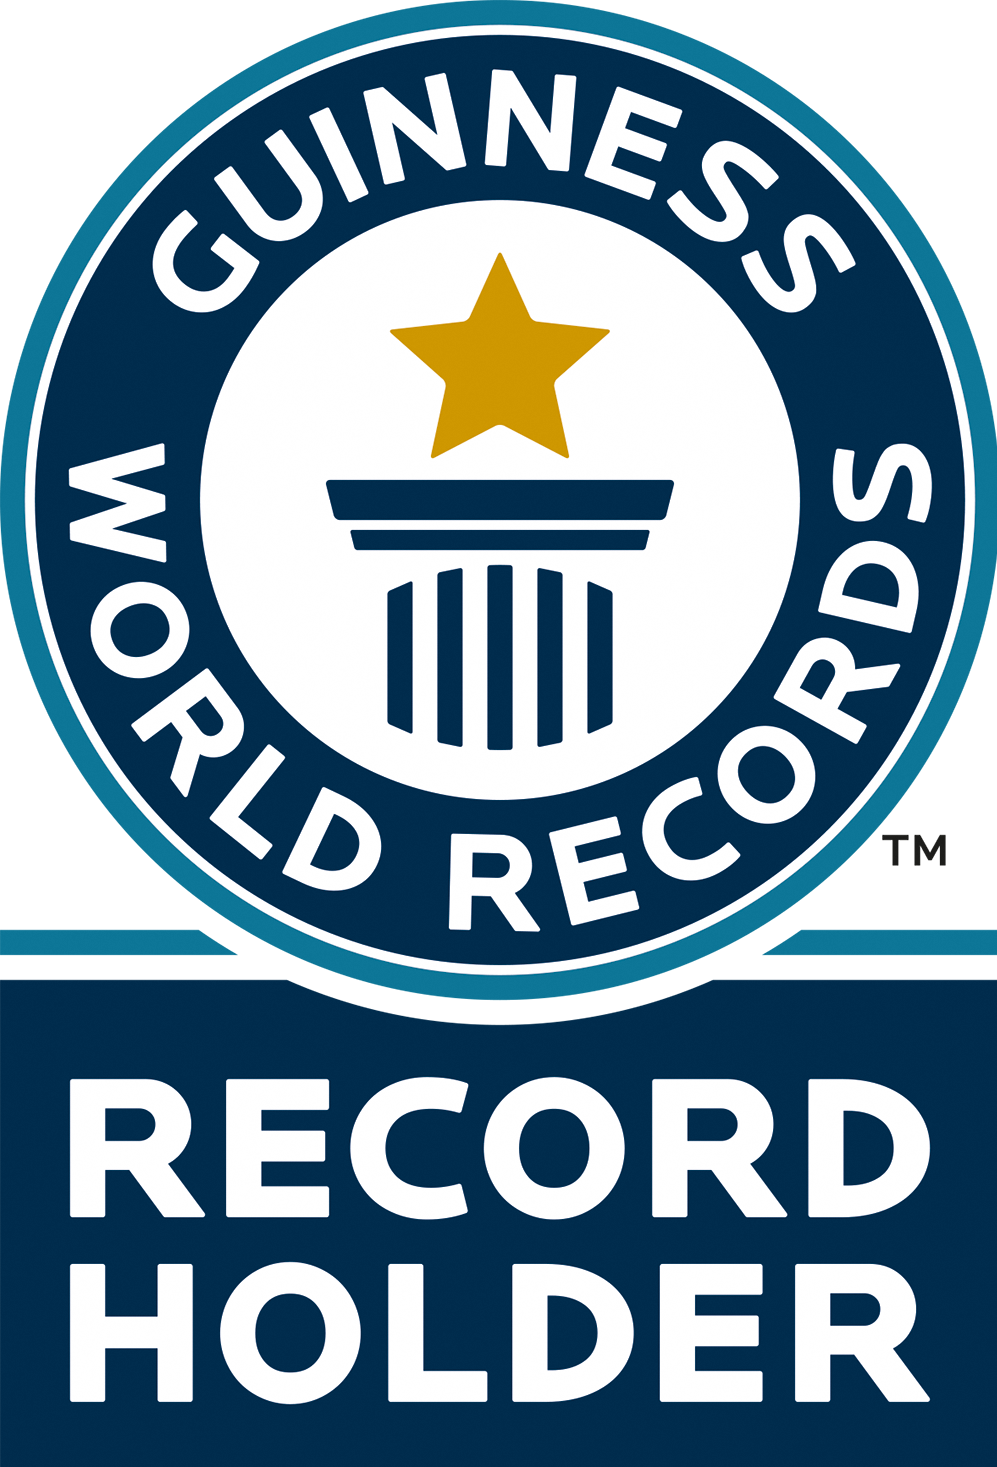 GUINNESS WORLD RECORDS™